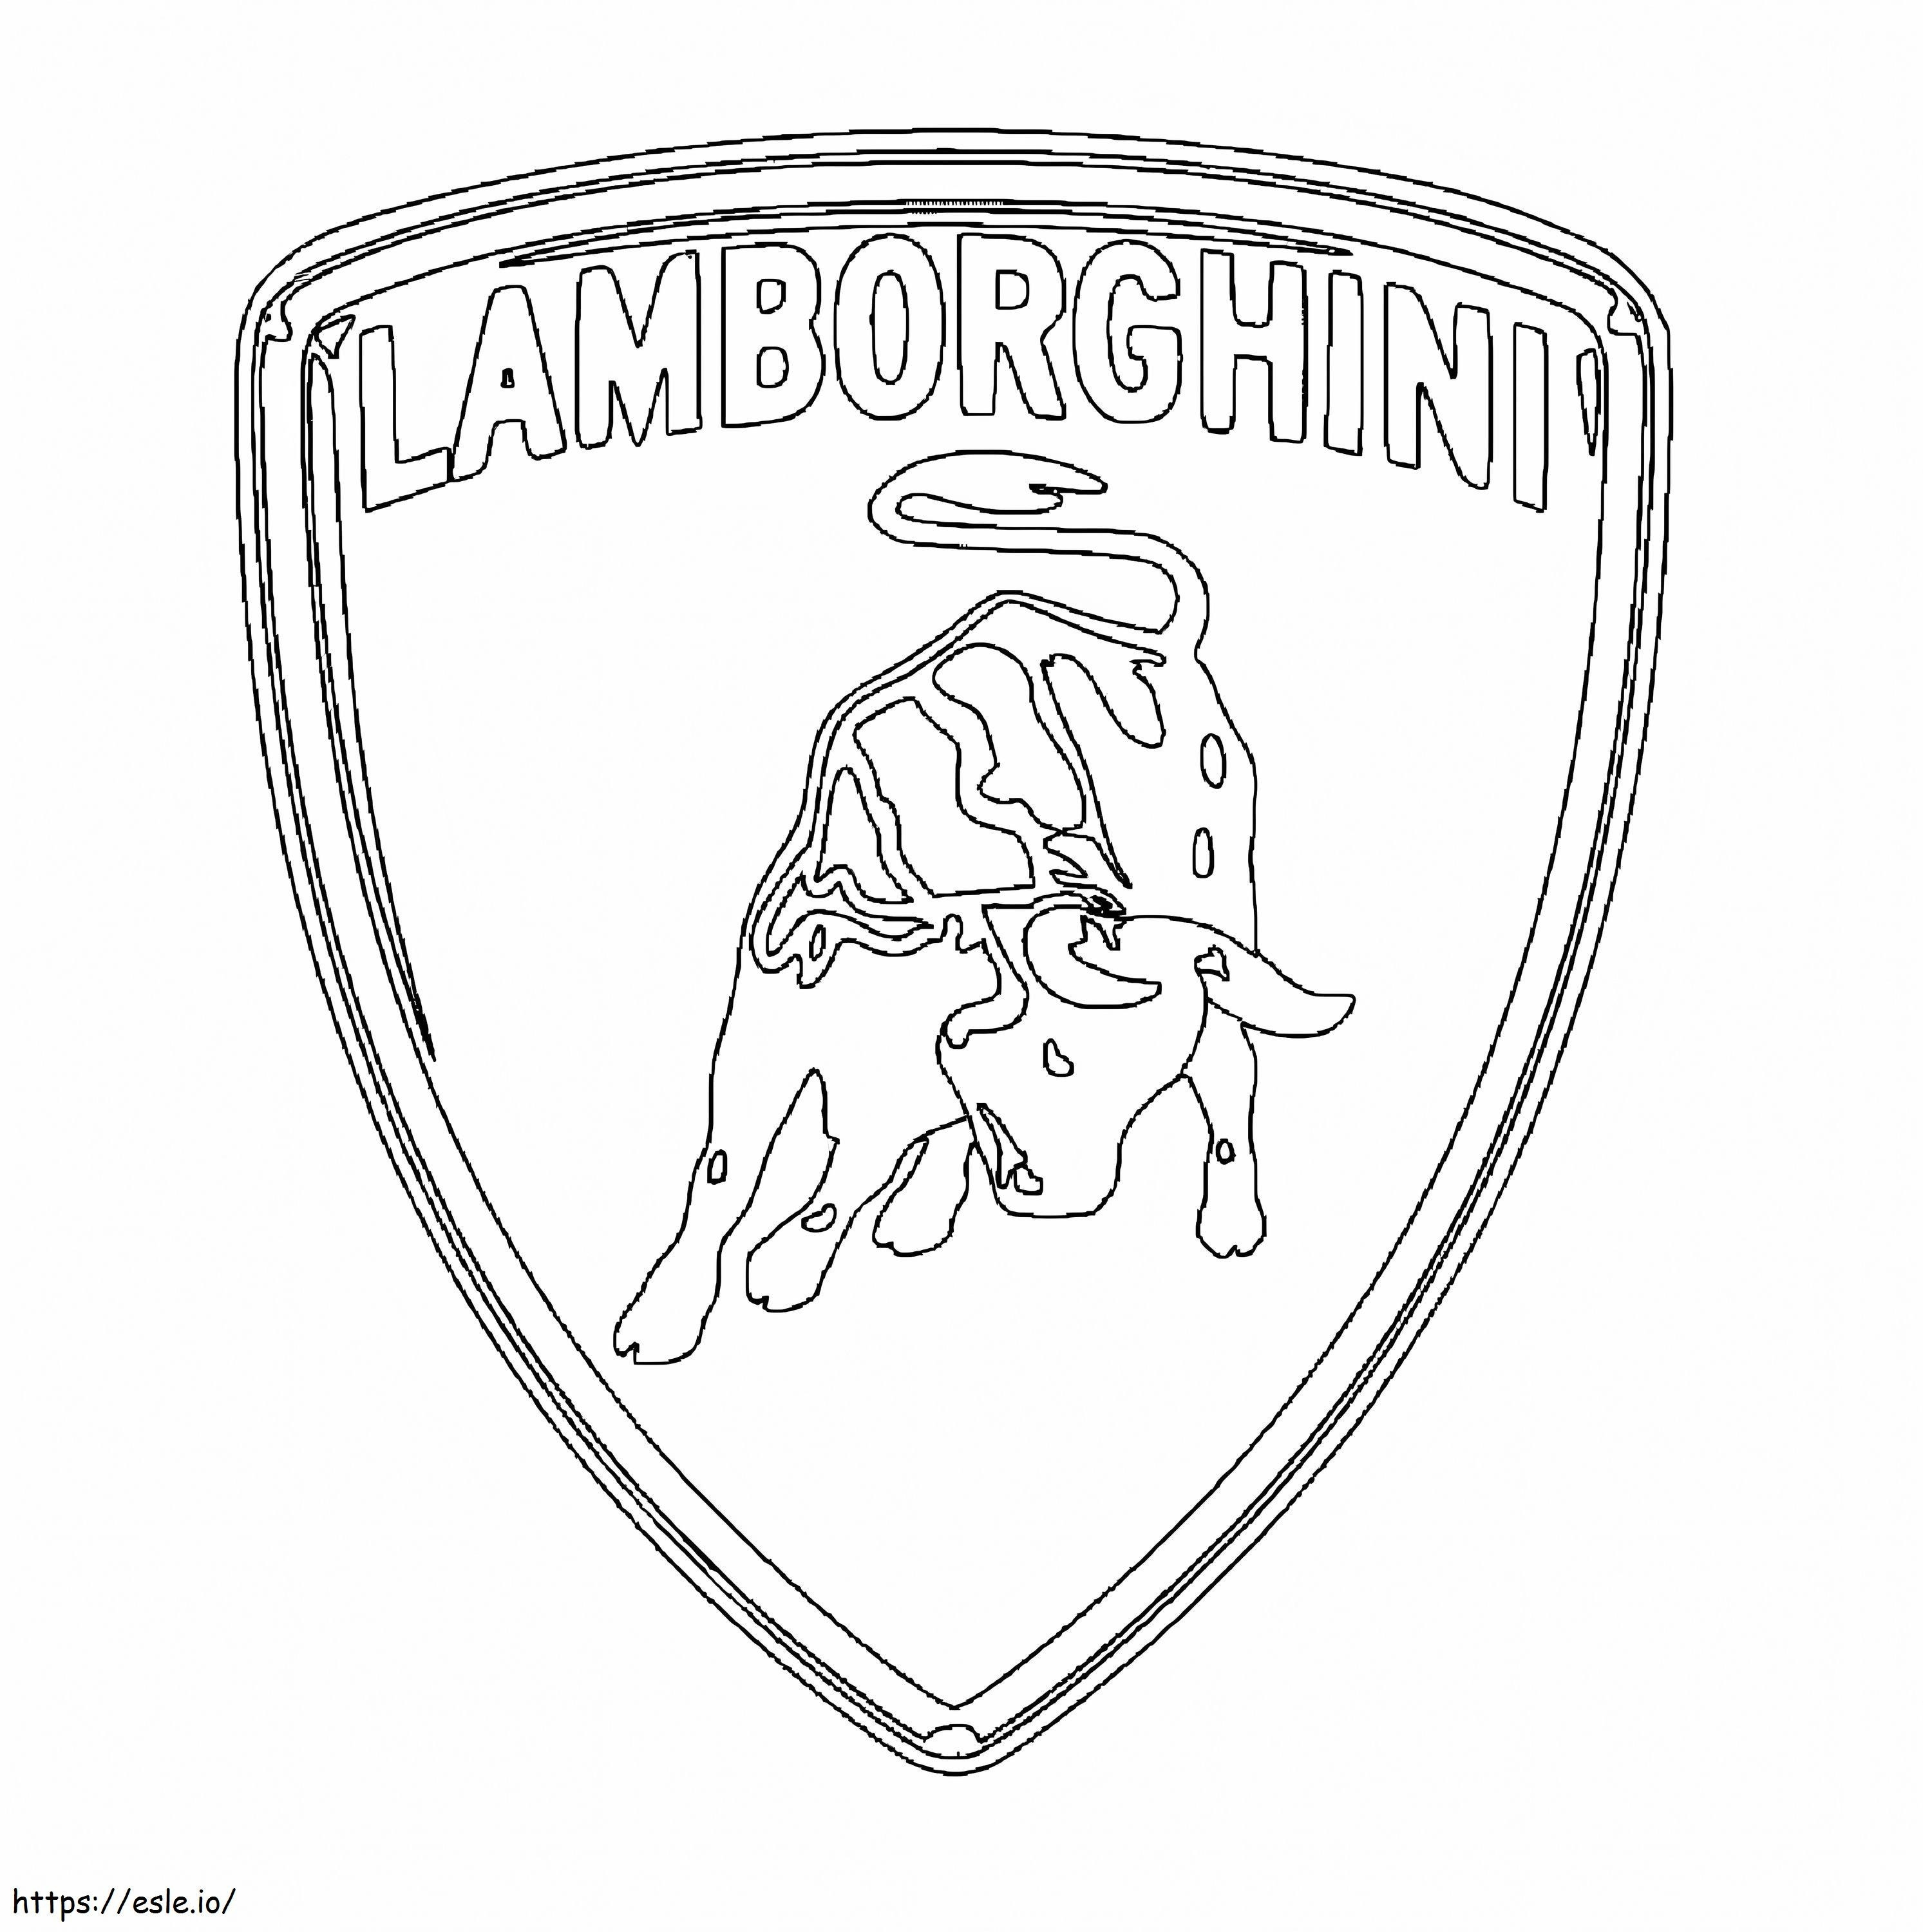 Lamborghini Logo coloring page